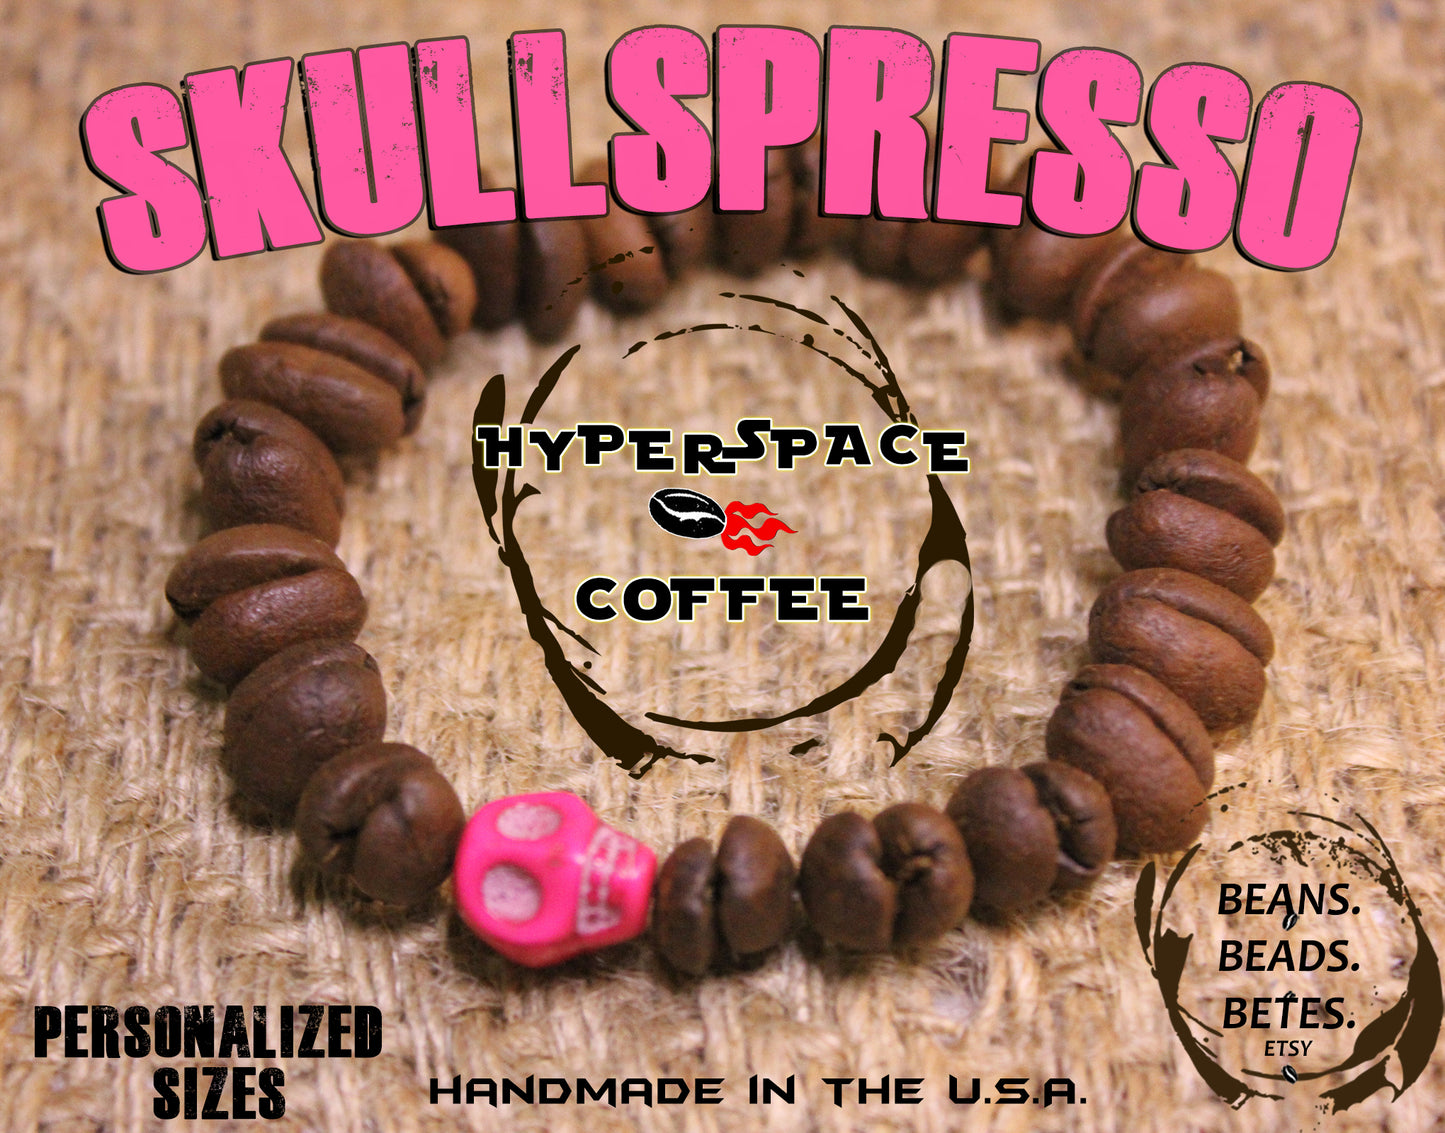 SKULLSPRESSO! Pink Skull Bead & Real Coffee Bean Beads Bracelet!